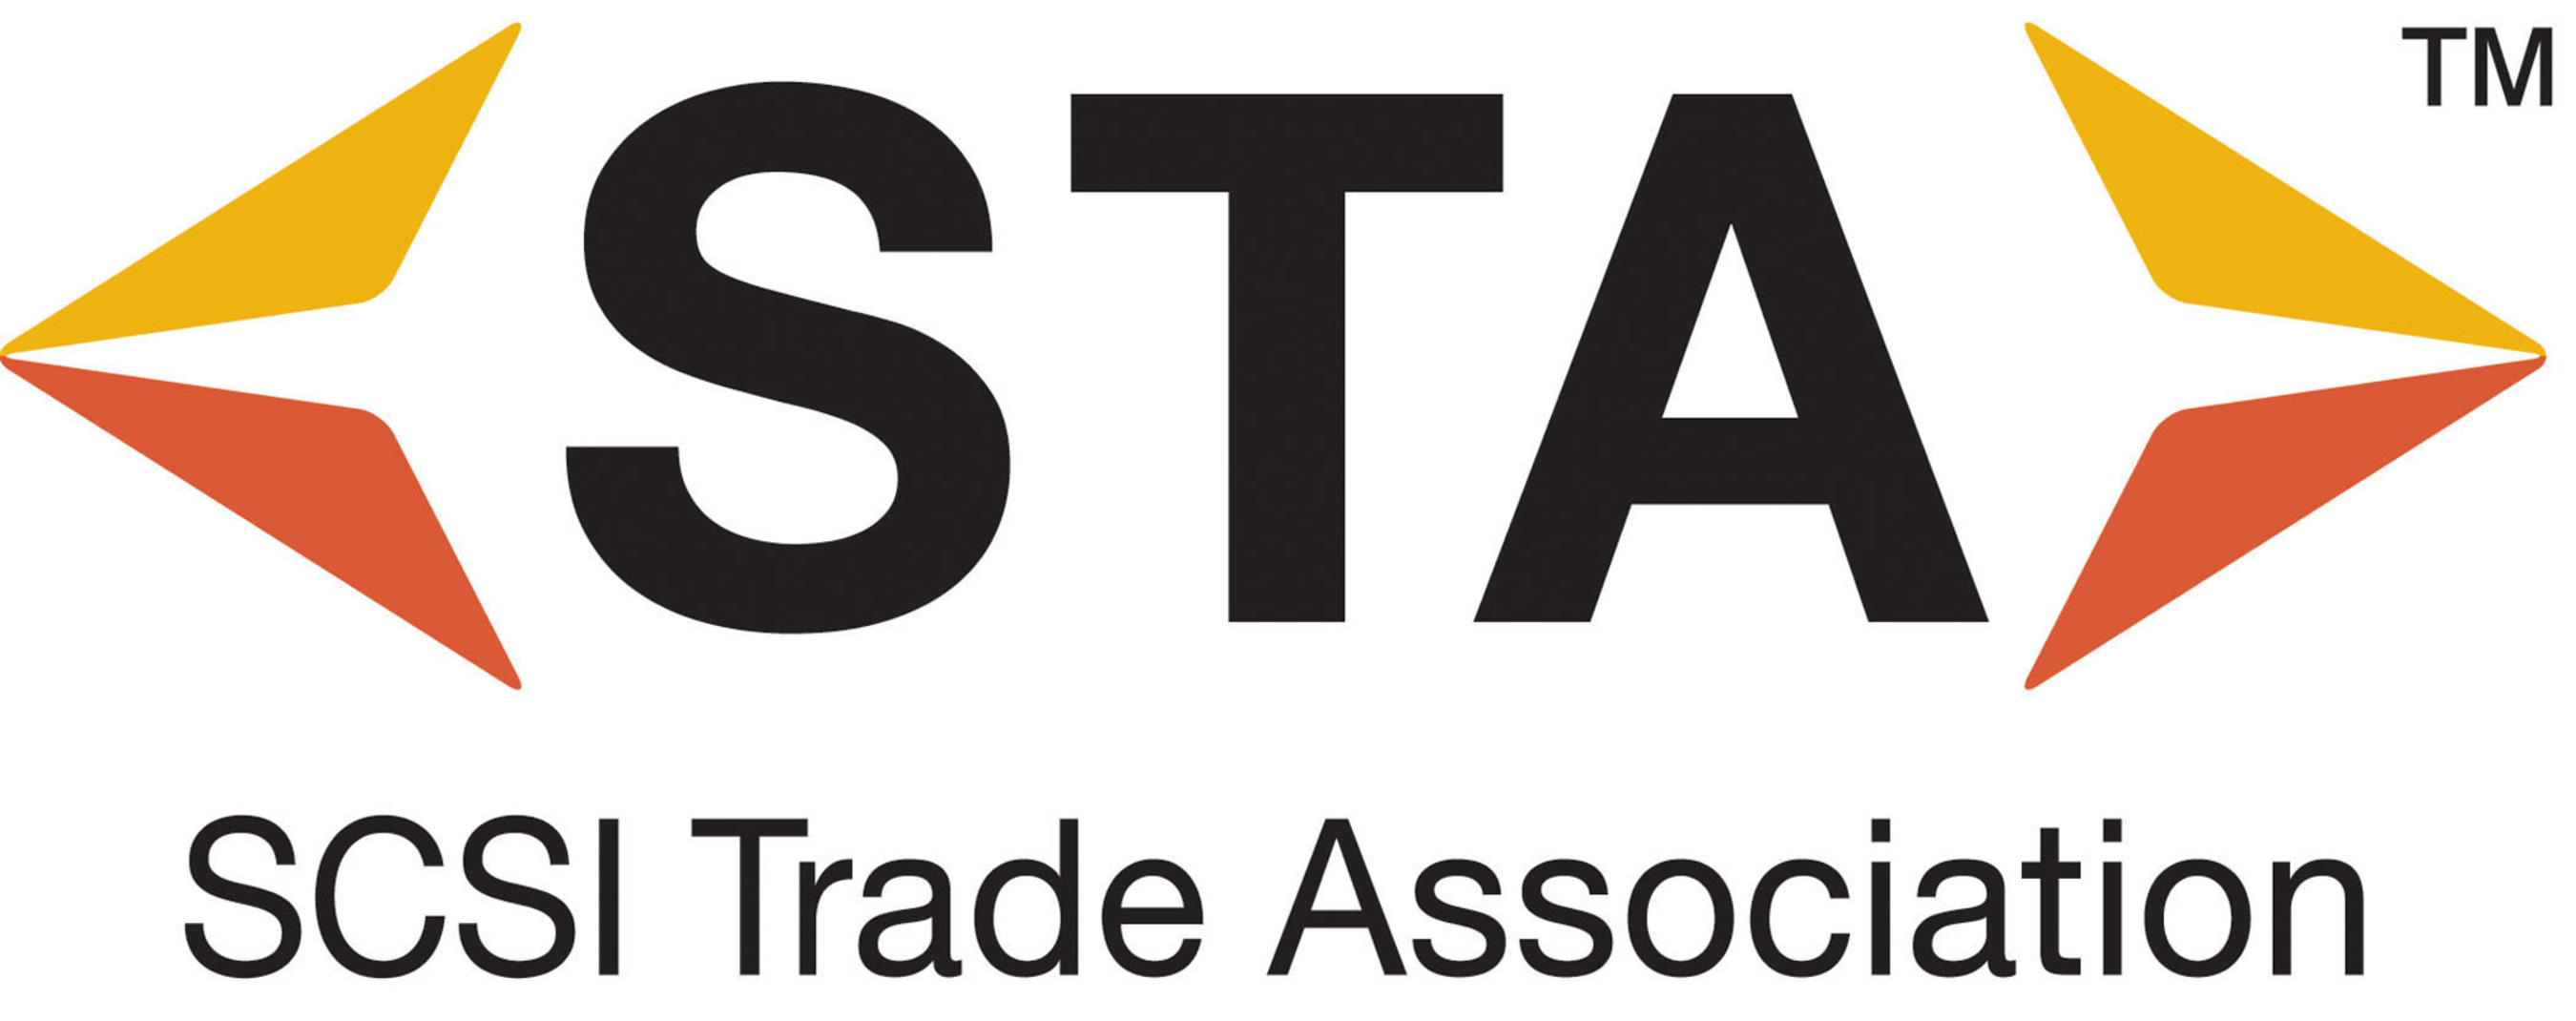 SCSI Trade Association Logo.